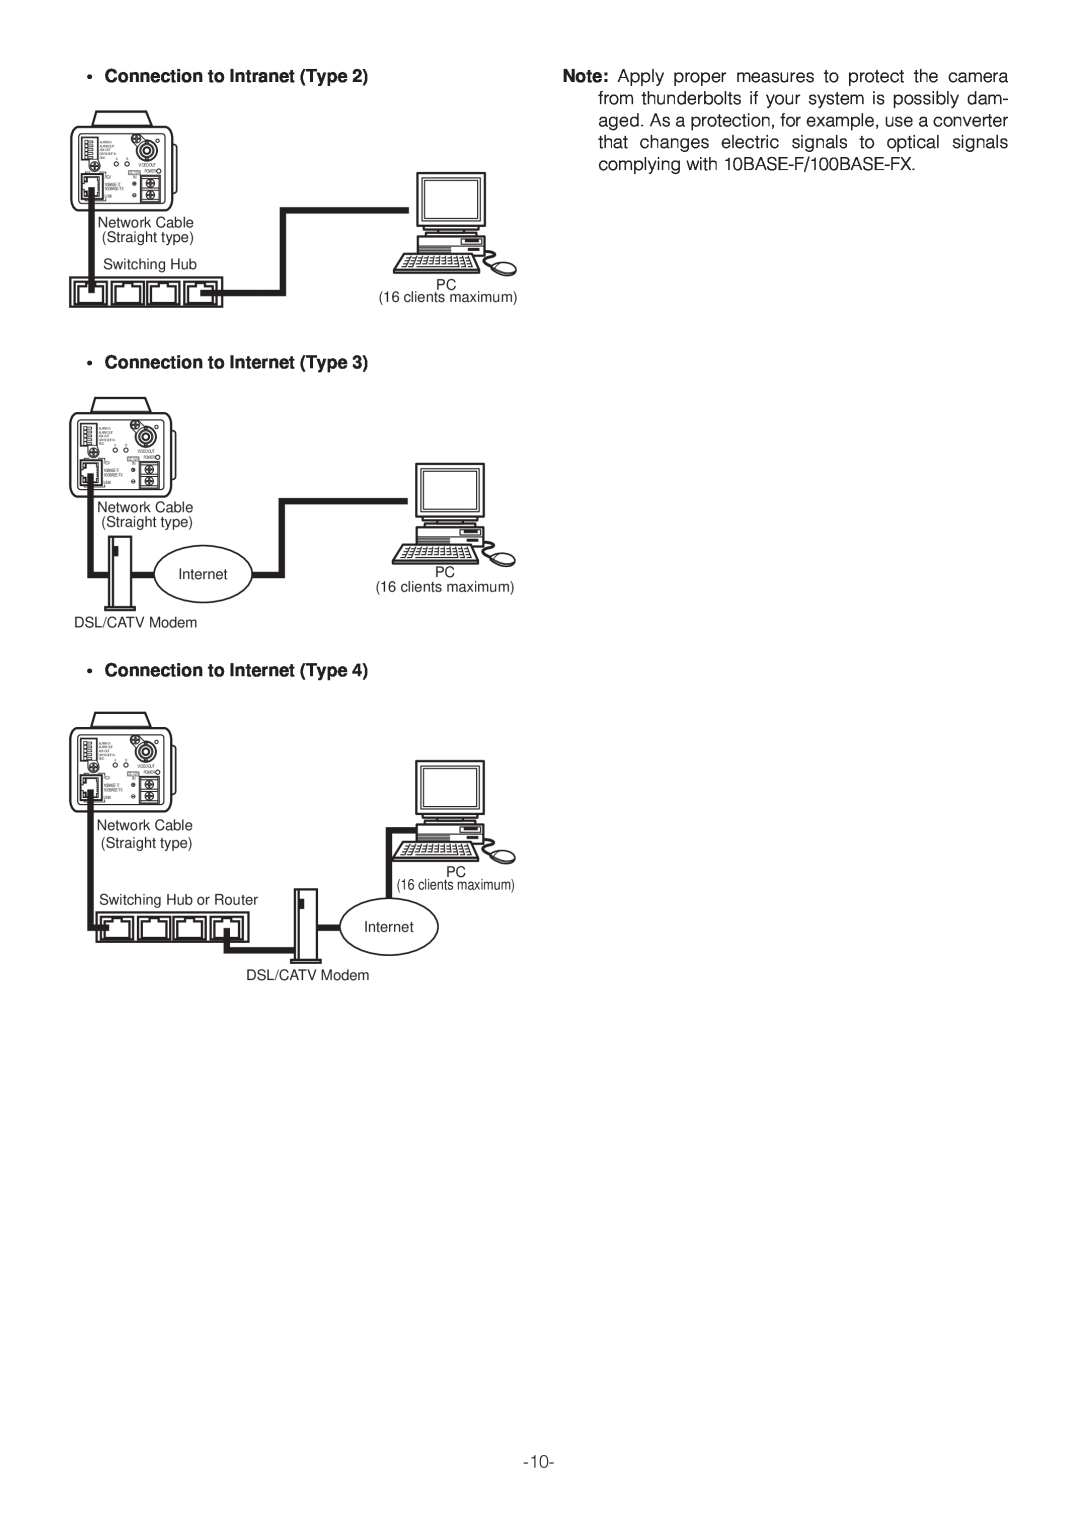 Panasonic WV-NP472E operating instructions clients maximum 